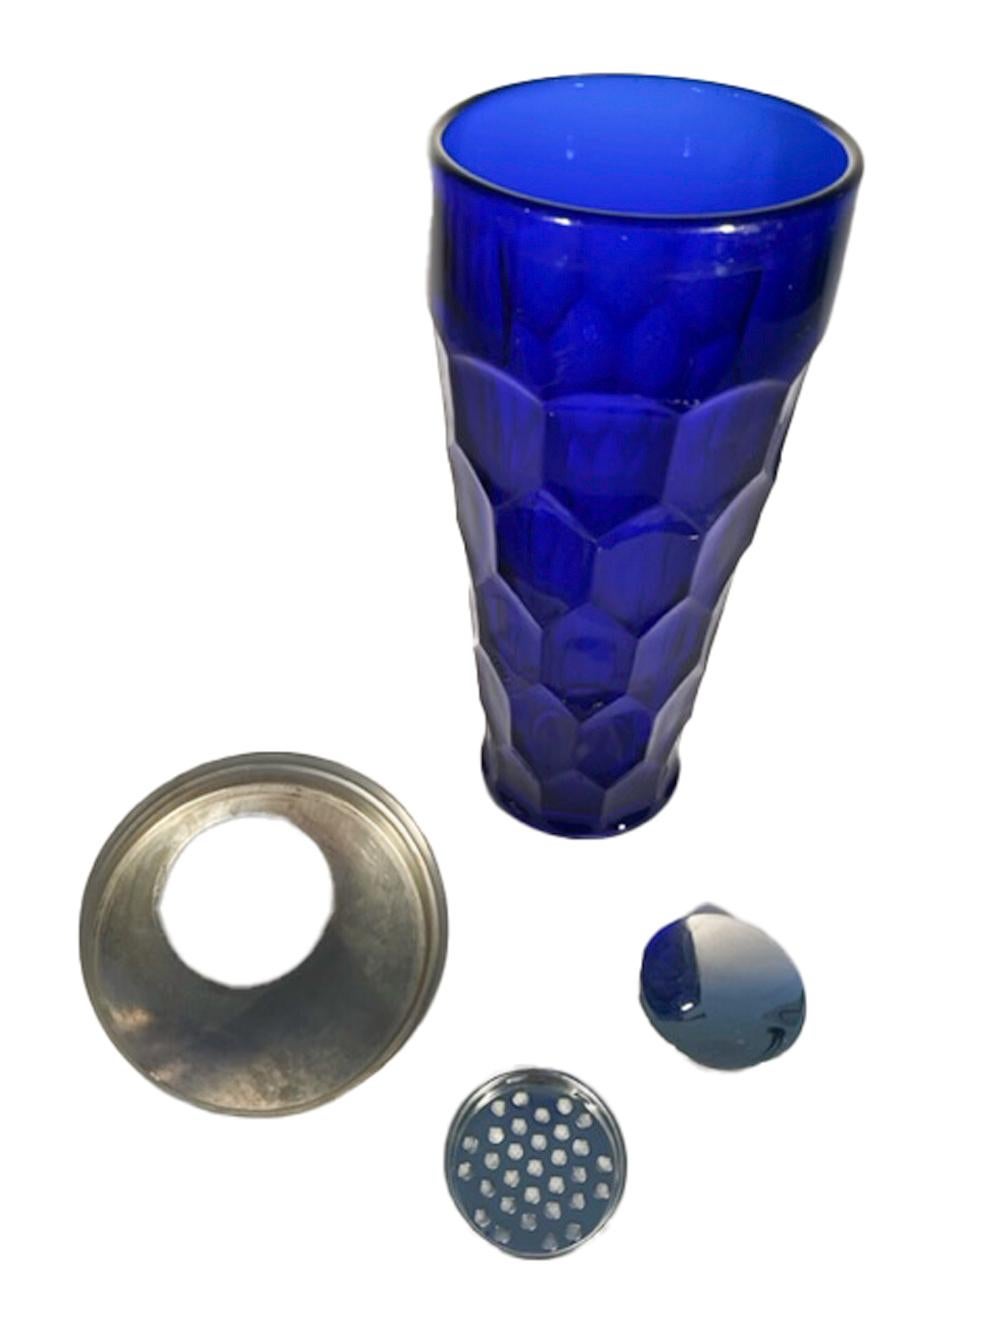 Art Deco Cobalt Blue Shaker by Paden City Glass in the 